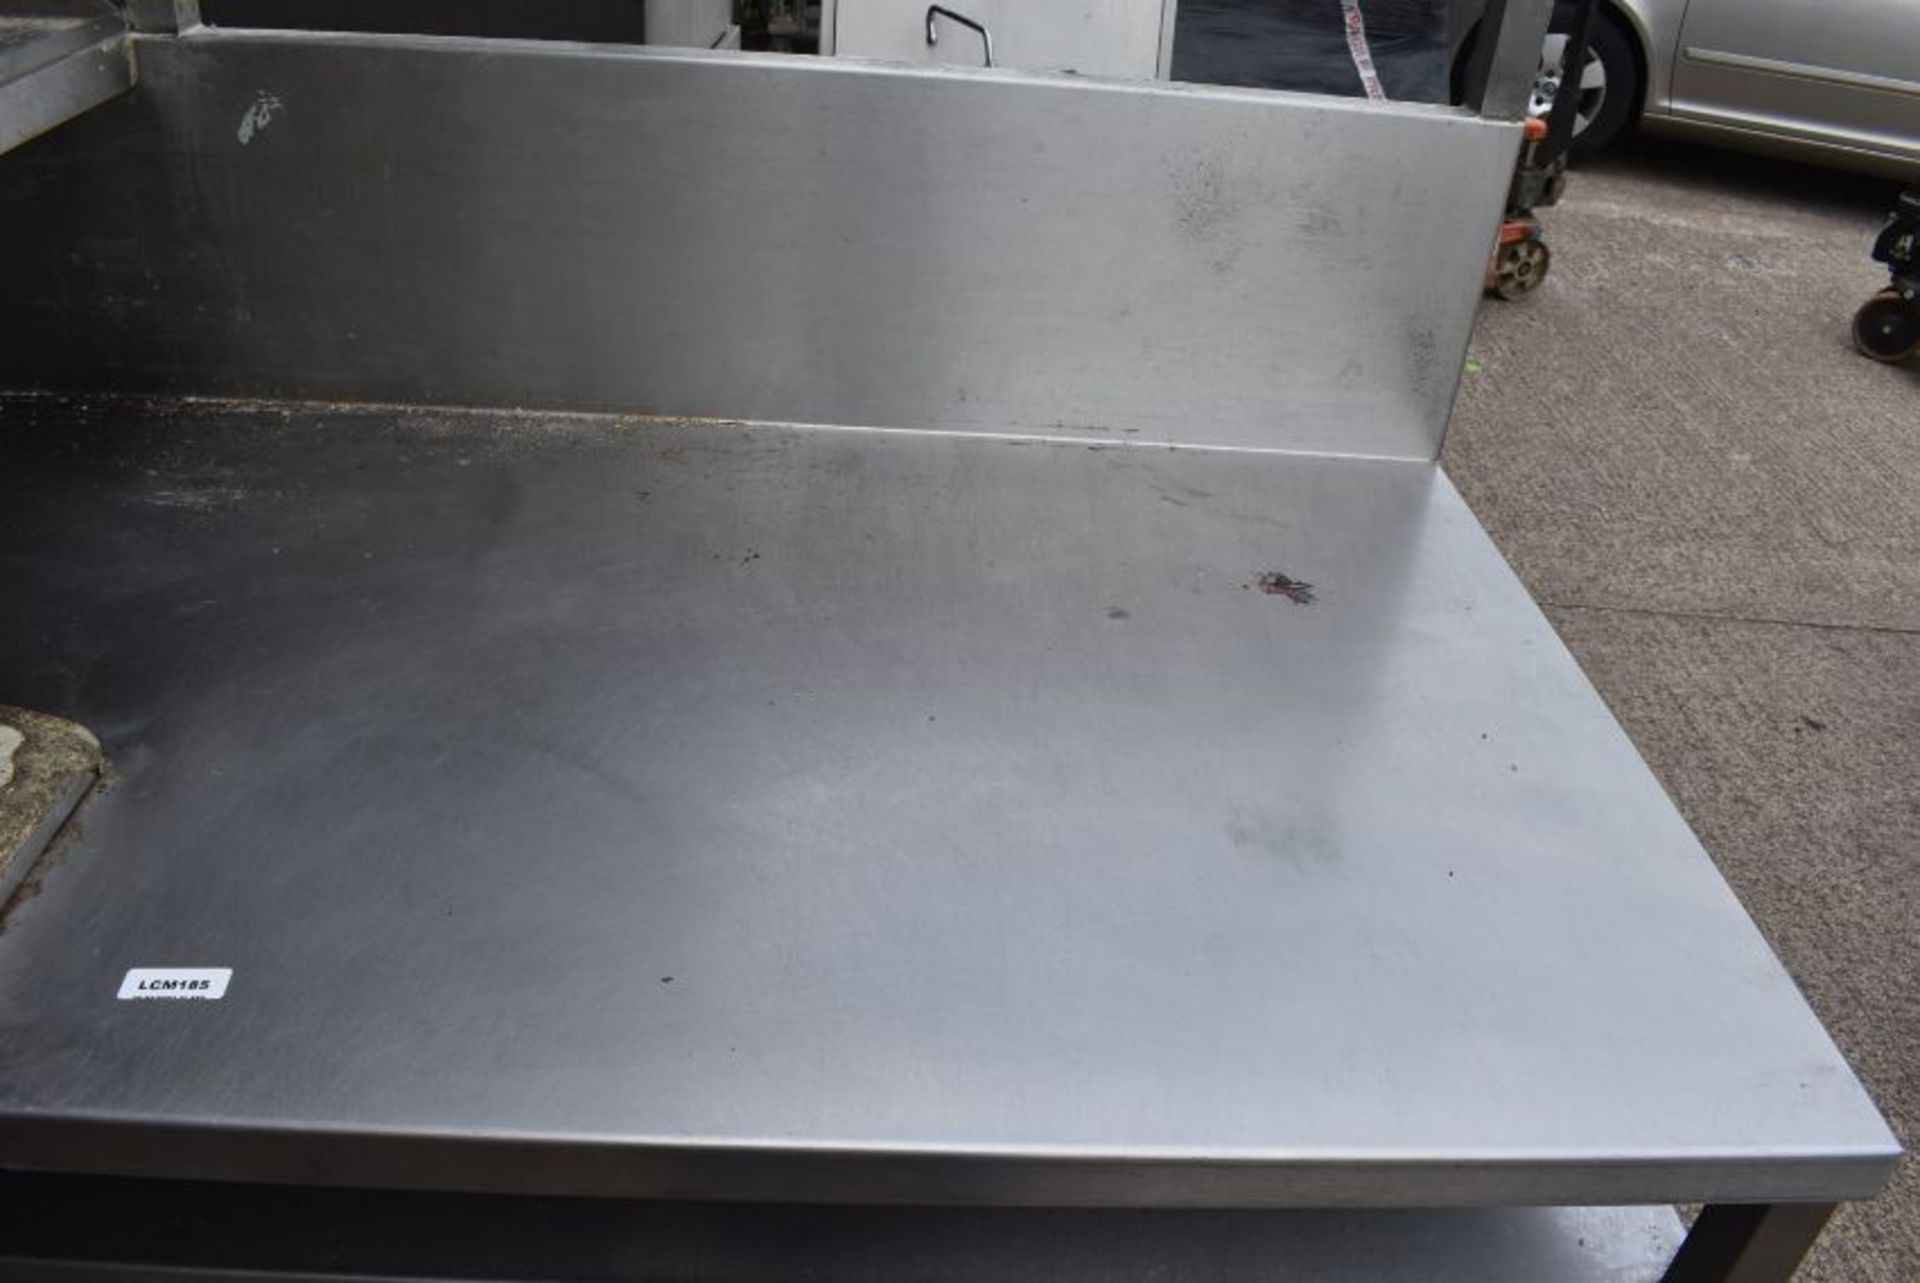 1 x Stainless Steel Workstation With Monitor / Printer Shelf, Undershelf and Splashback - - Image 3 of 6